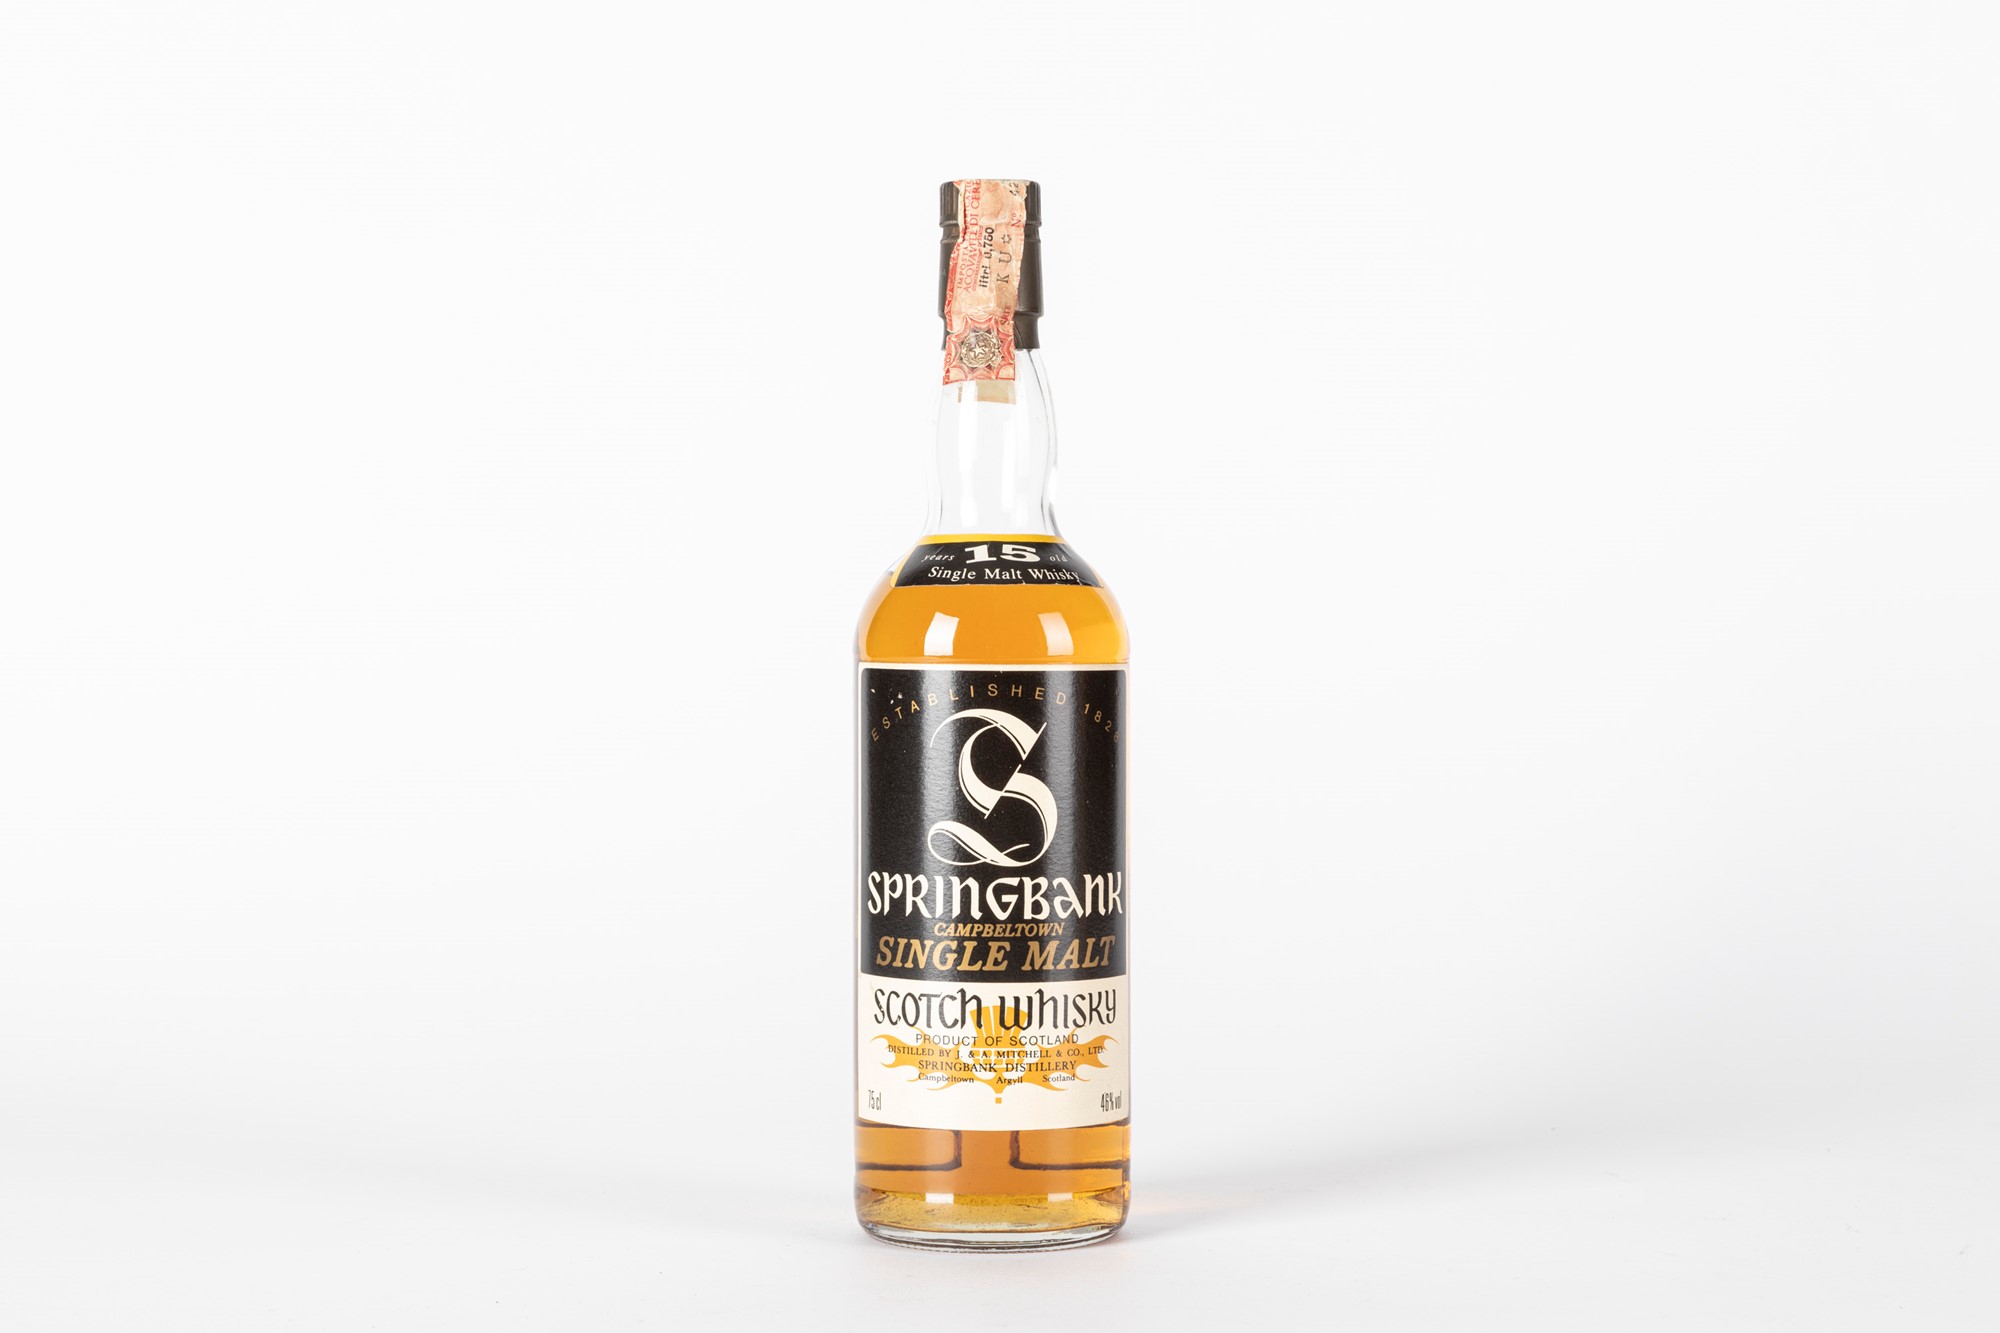 Scotland - Whisky / Springbank 15 Year Old